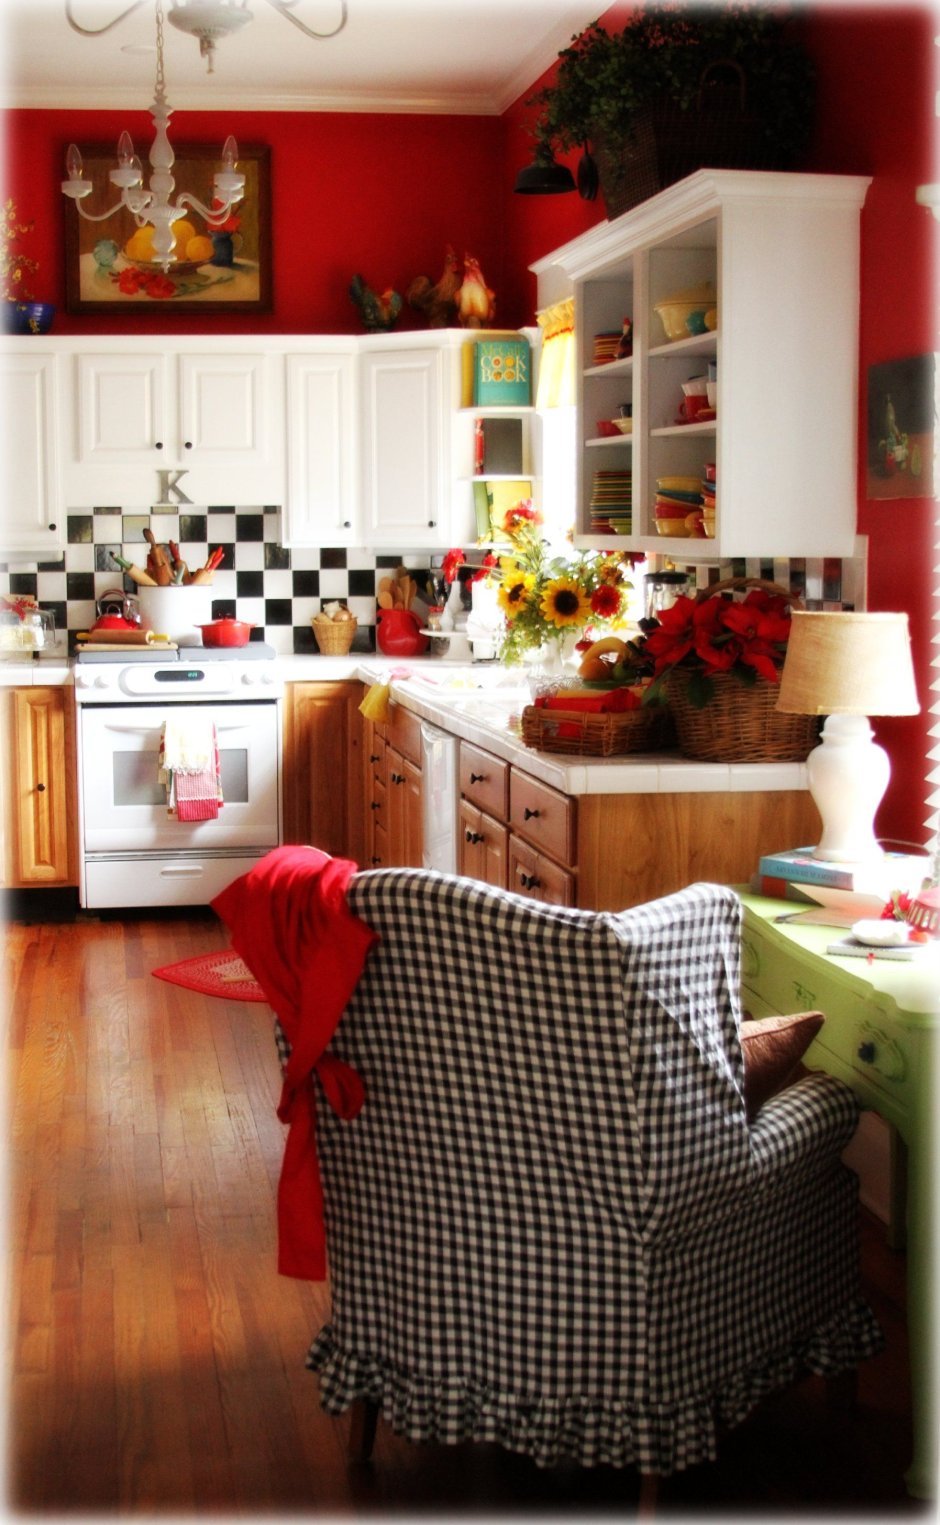 Уютная кухня красного цвета